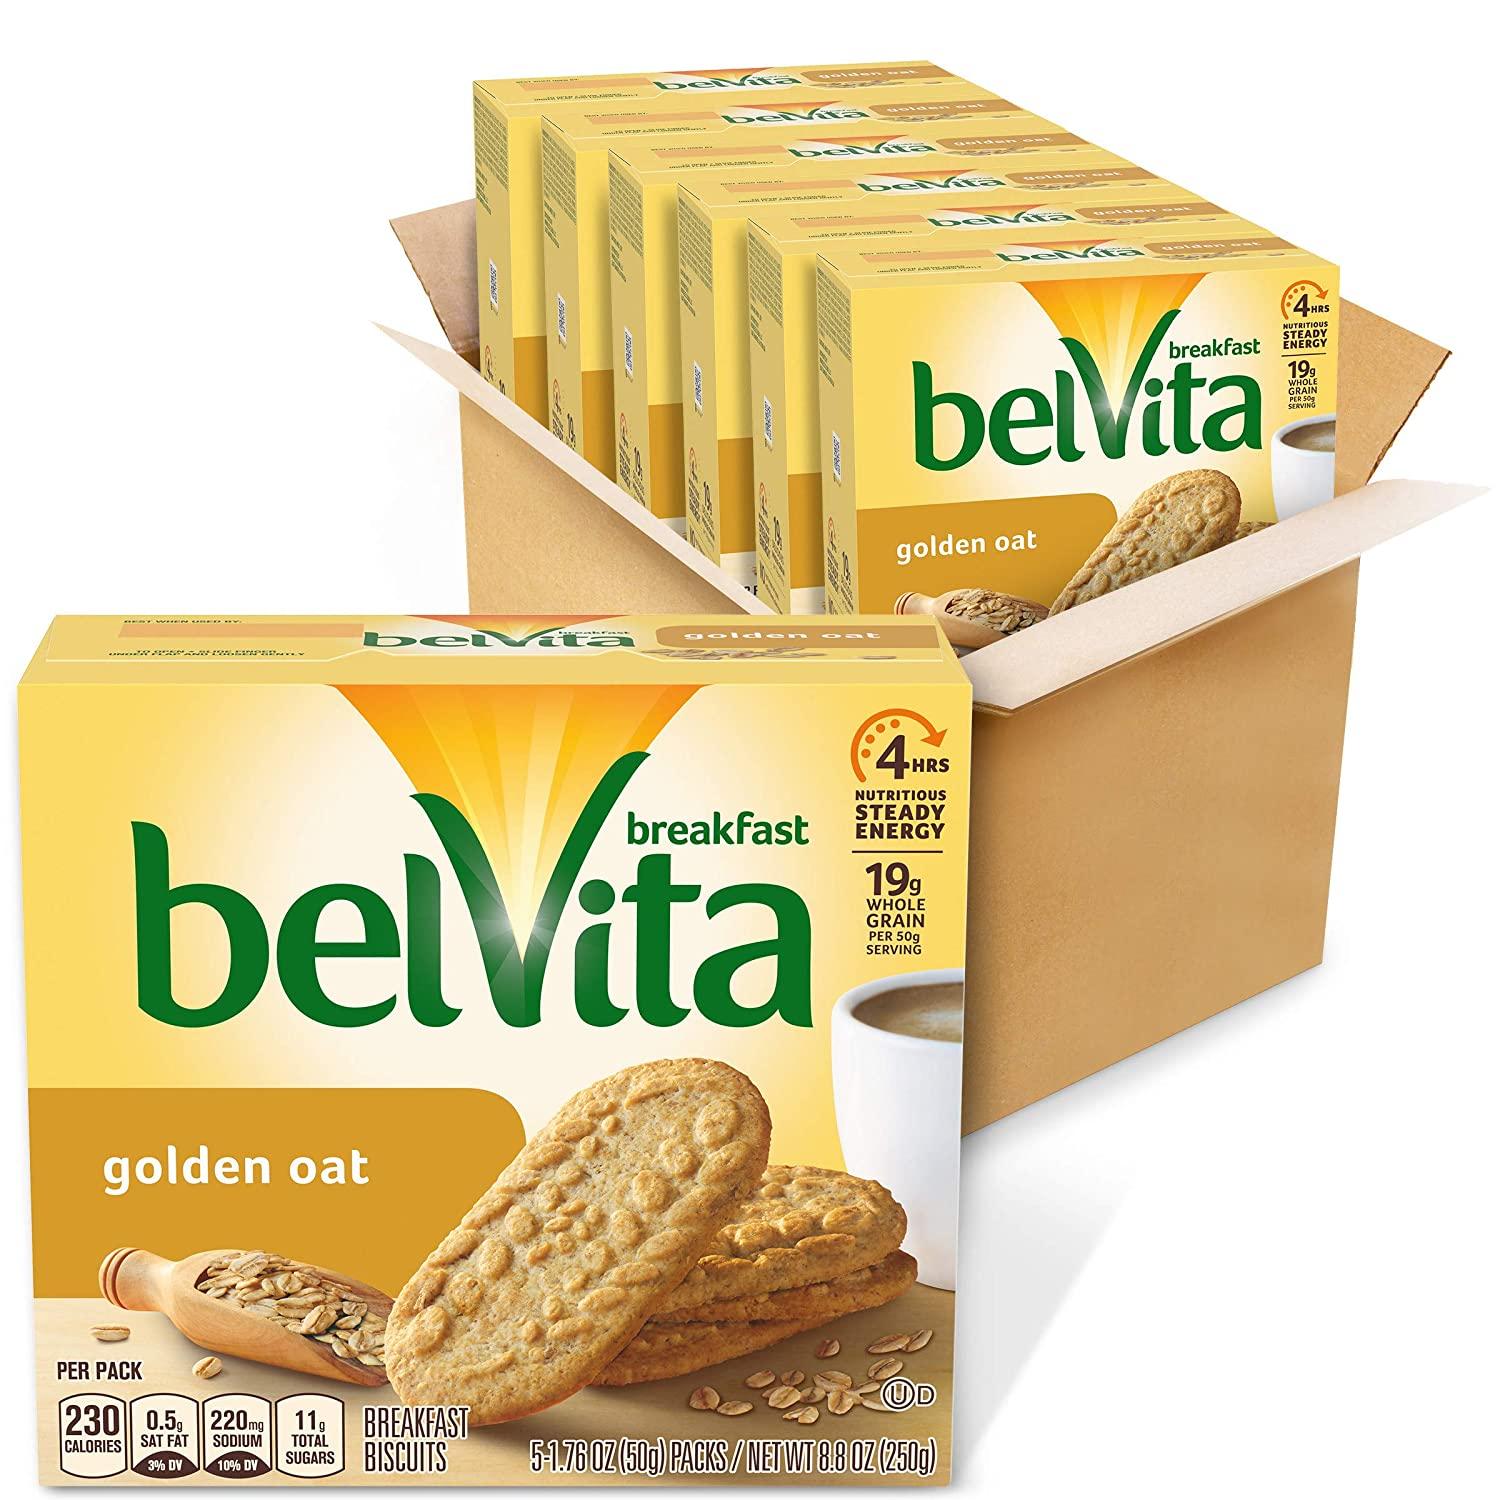 30 belVita Golden Oat Breakfast Biscuits for $8.36 Shipped